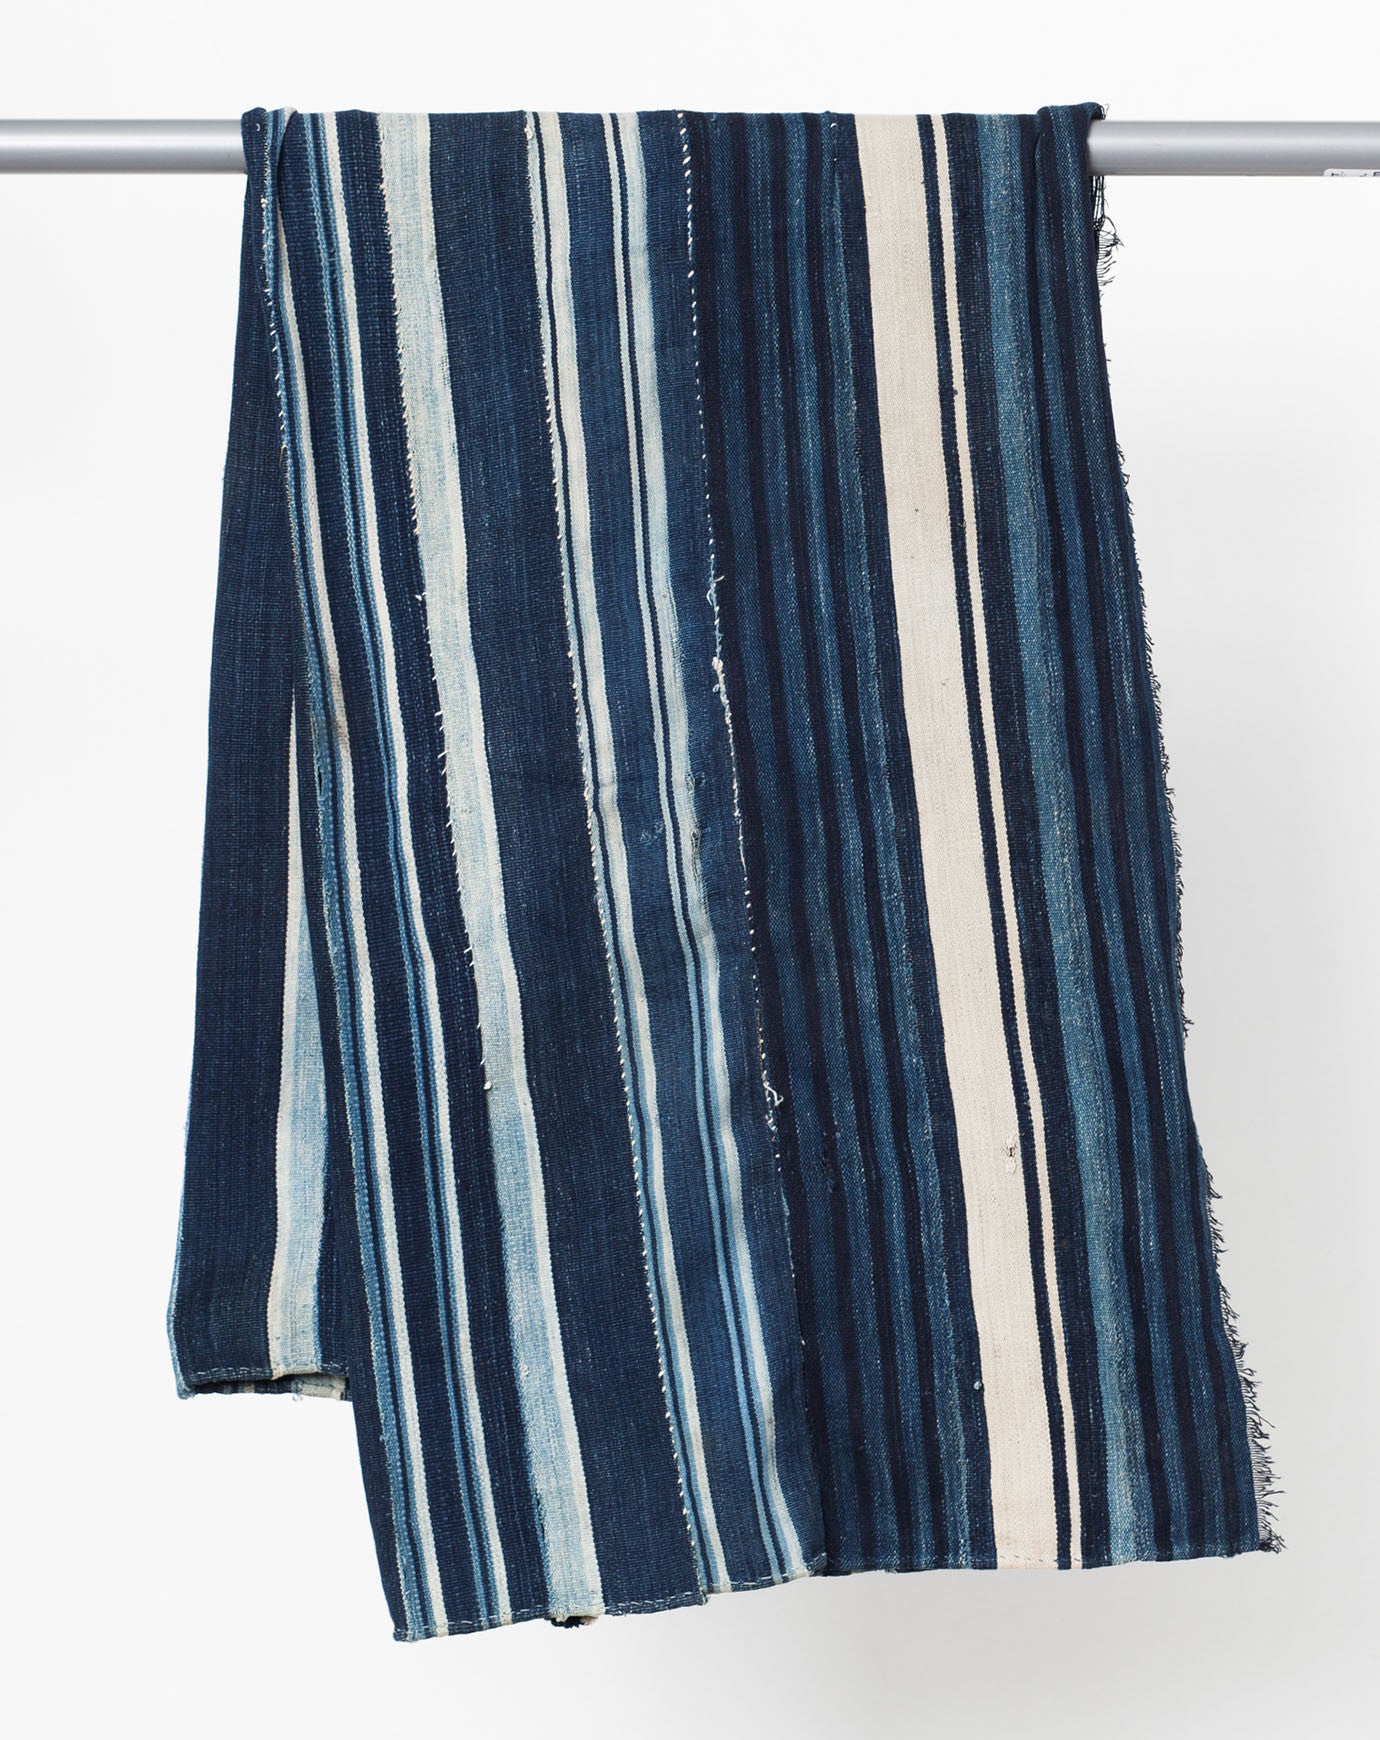 Striped Dyed Textile in Indigo